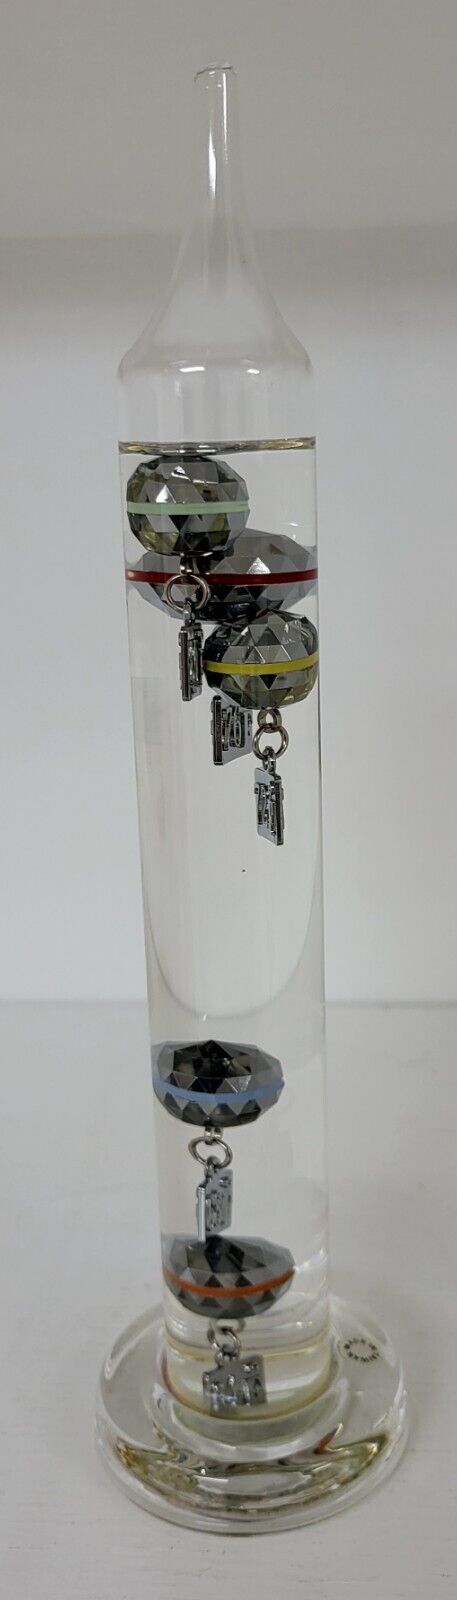 Galileo Liquid Thermometer Hand-blown Glass 10 1/2 inches